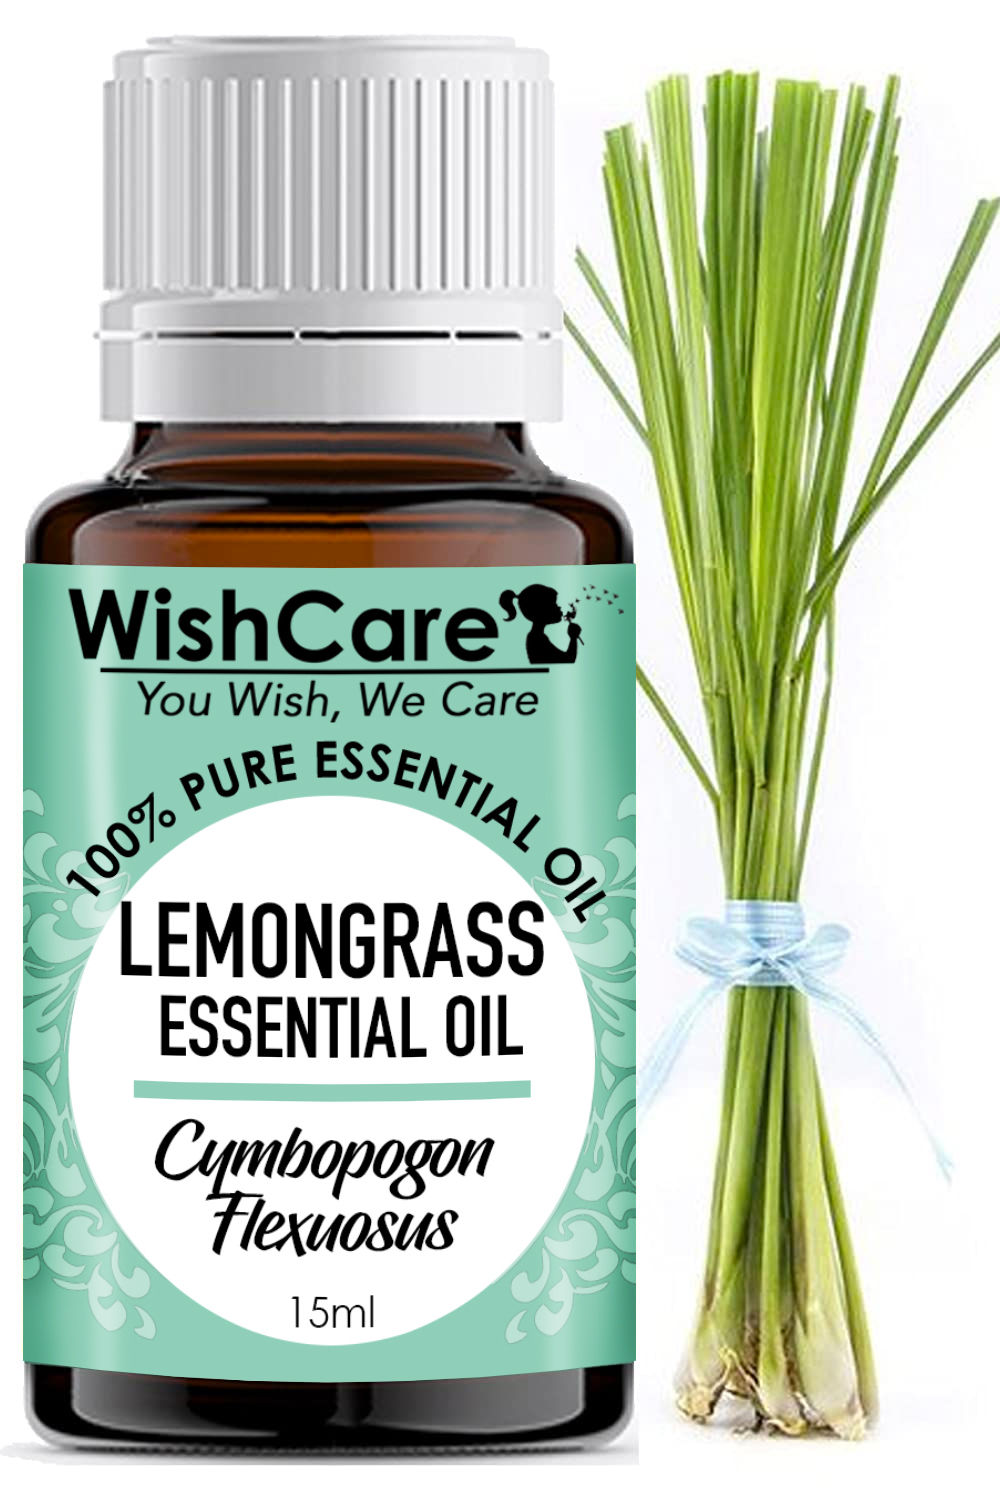 Lemongrass Oil For Hair Problems  DIY Recipes For Hair Growth  VedaOils